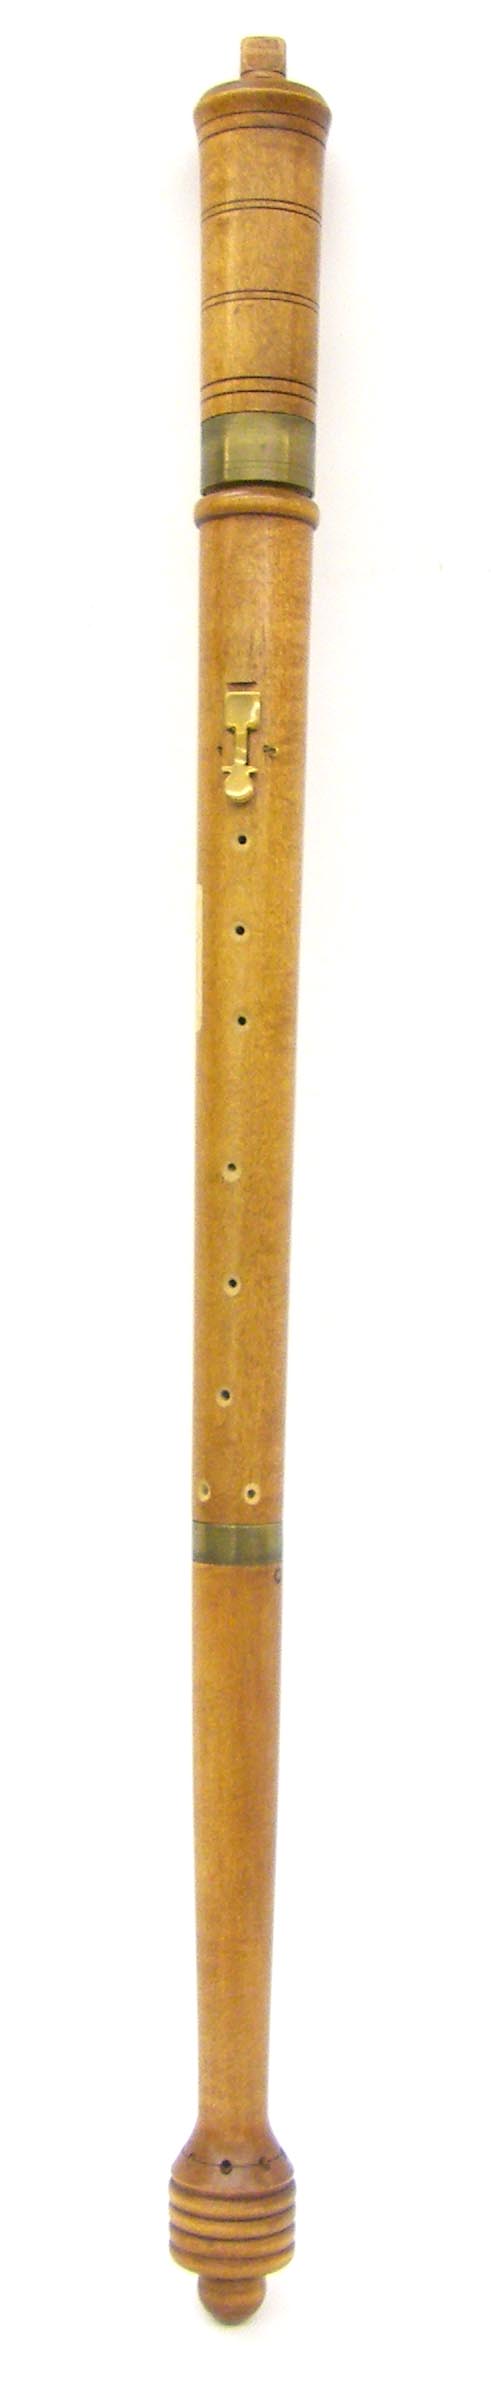 Tenor cornamuse in C, with brass mounts and single brass key, 777mm long